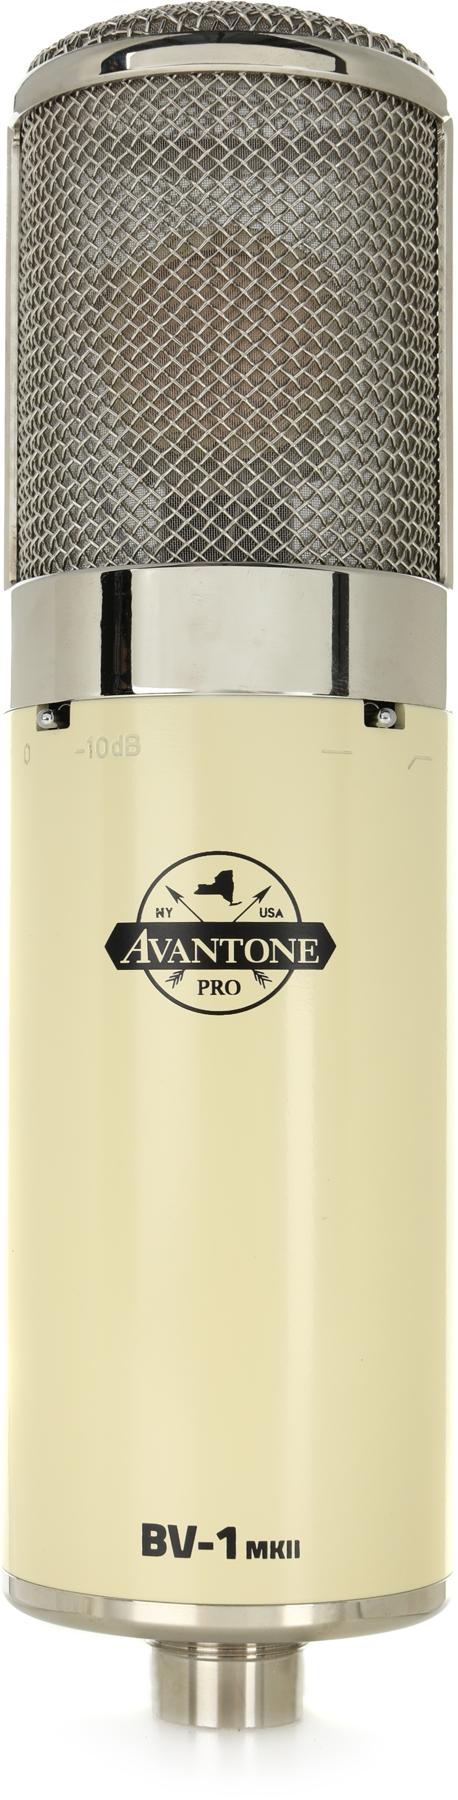 Avantone Pro BV-1 mkII Large-diaphragm Tube Condenser Microphone-image